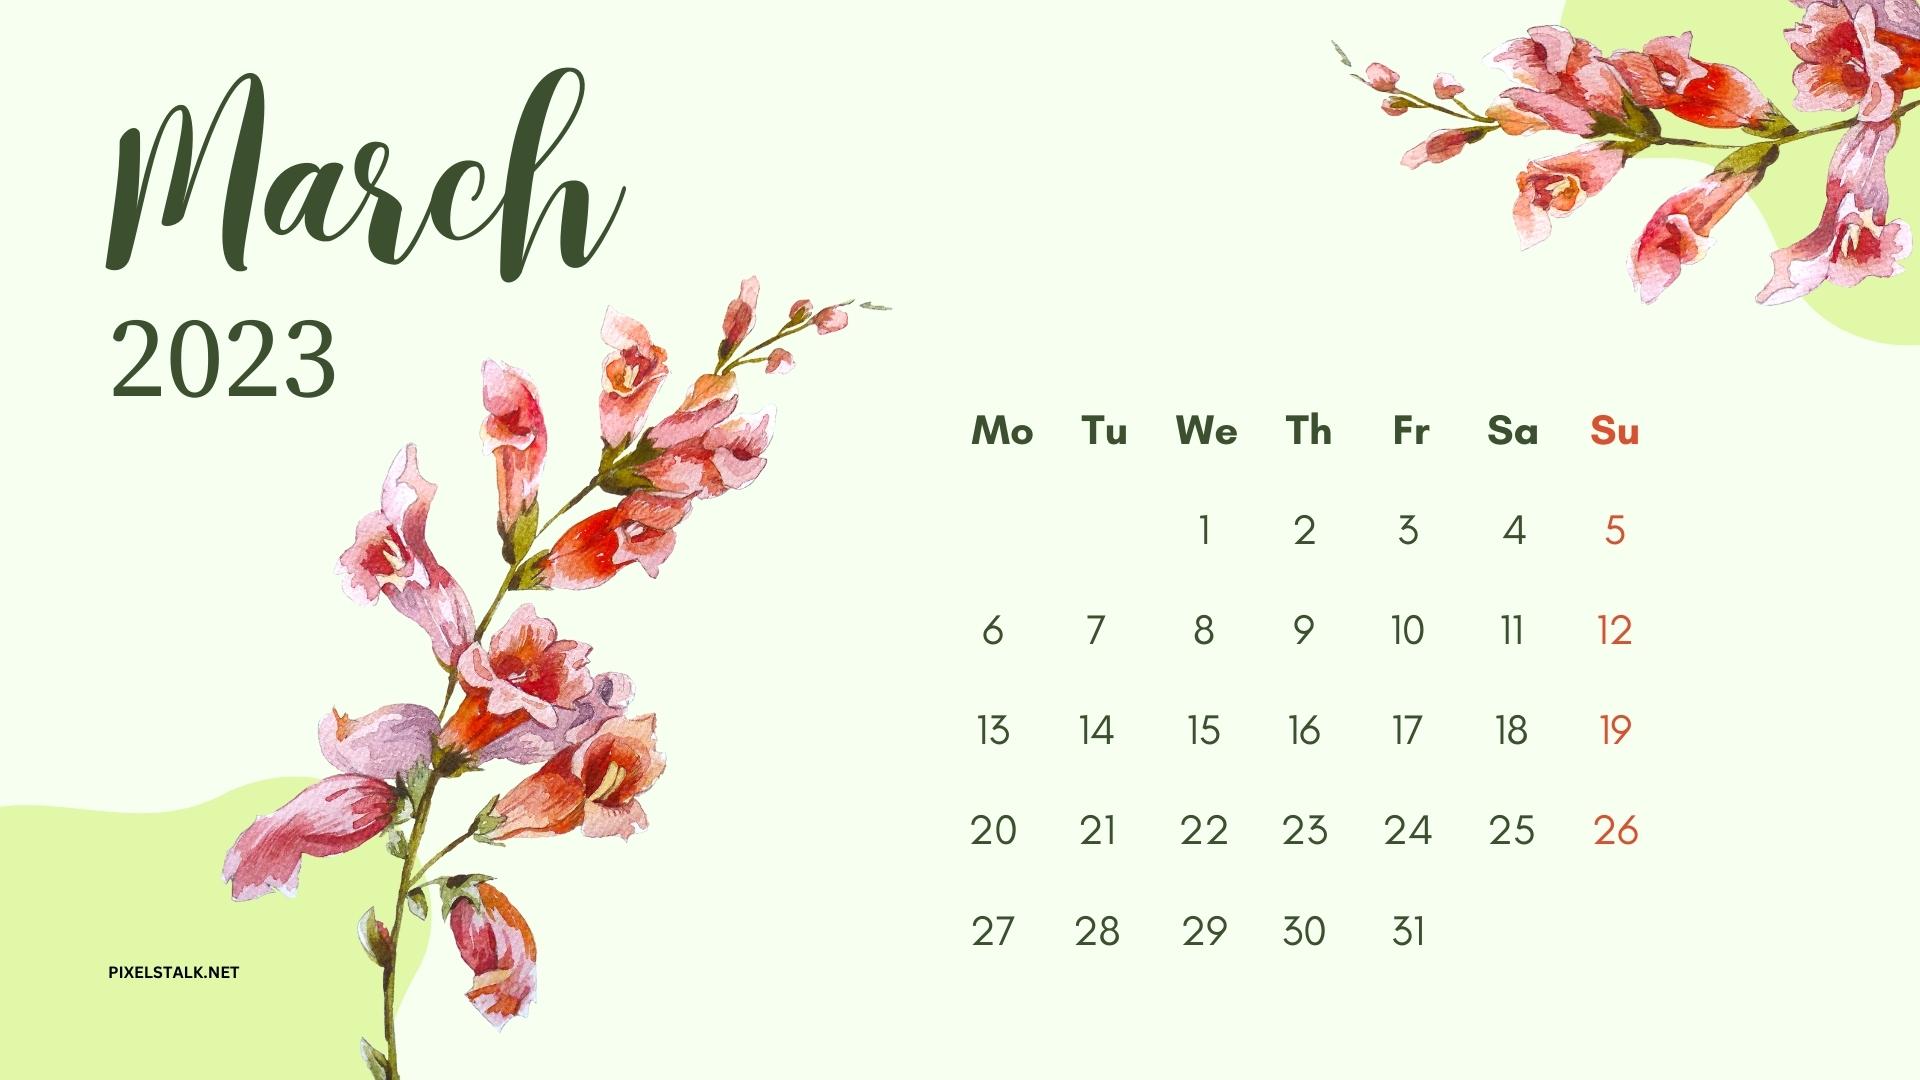 March 2022 Calendar Wallpaper  Sarah Hearts